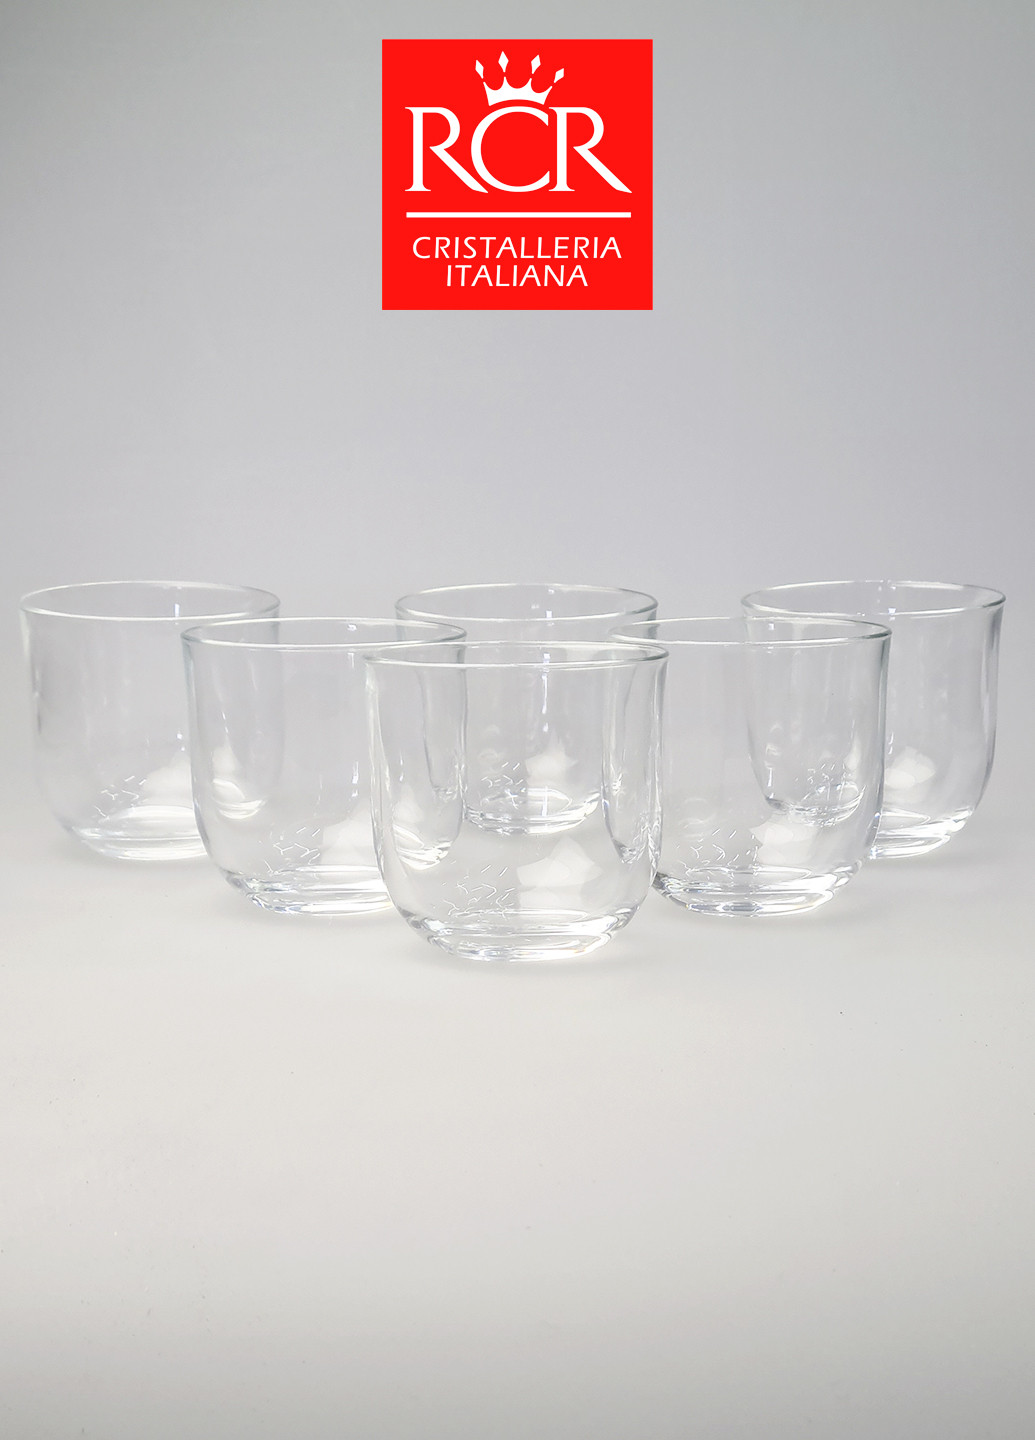 Набір кришталевих склянок 12 шт (2 набори*6 шт.) RCR luxion eco crystal glass (259663287)